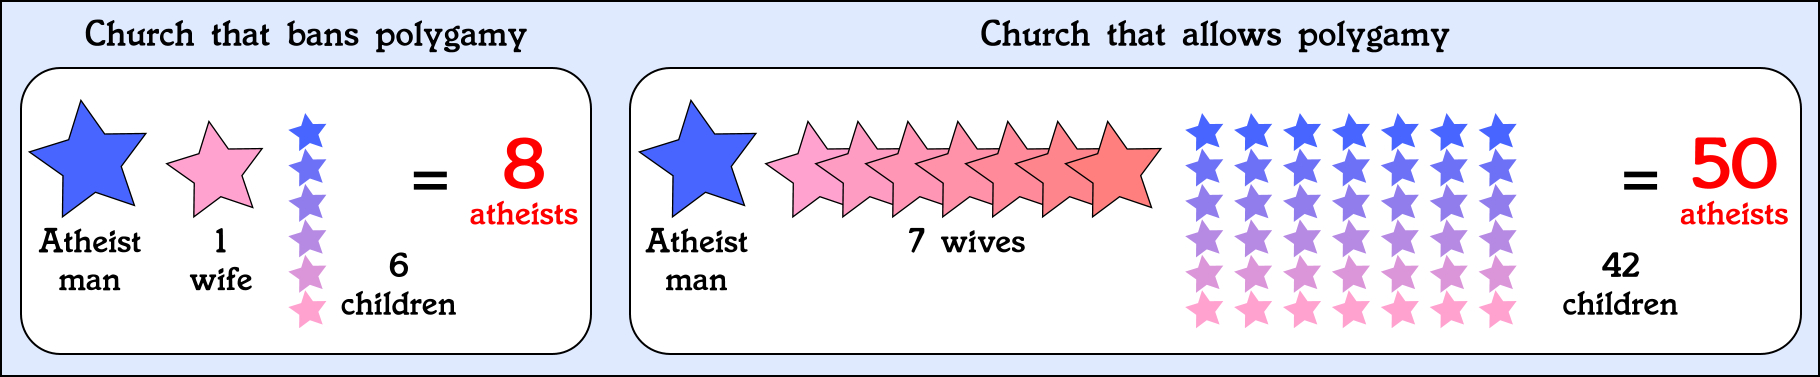 Why most churches ban polygamy